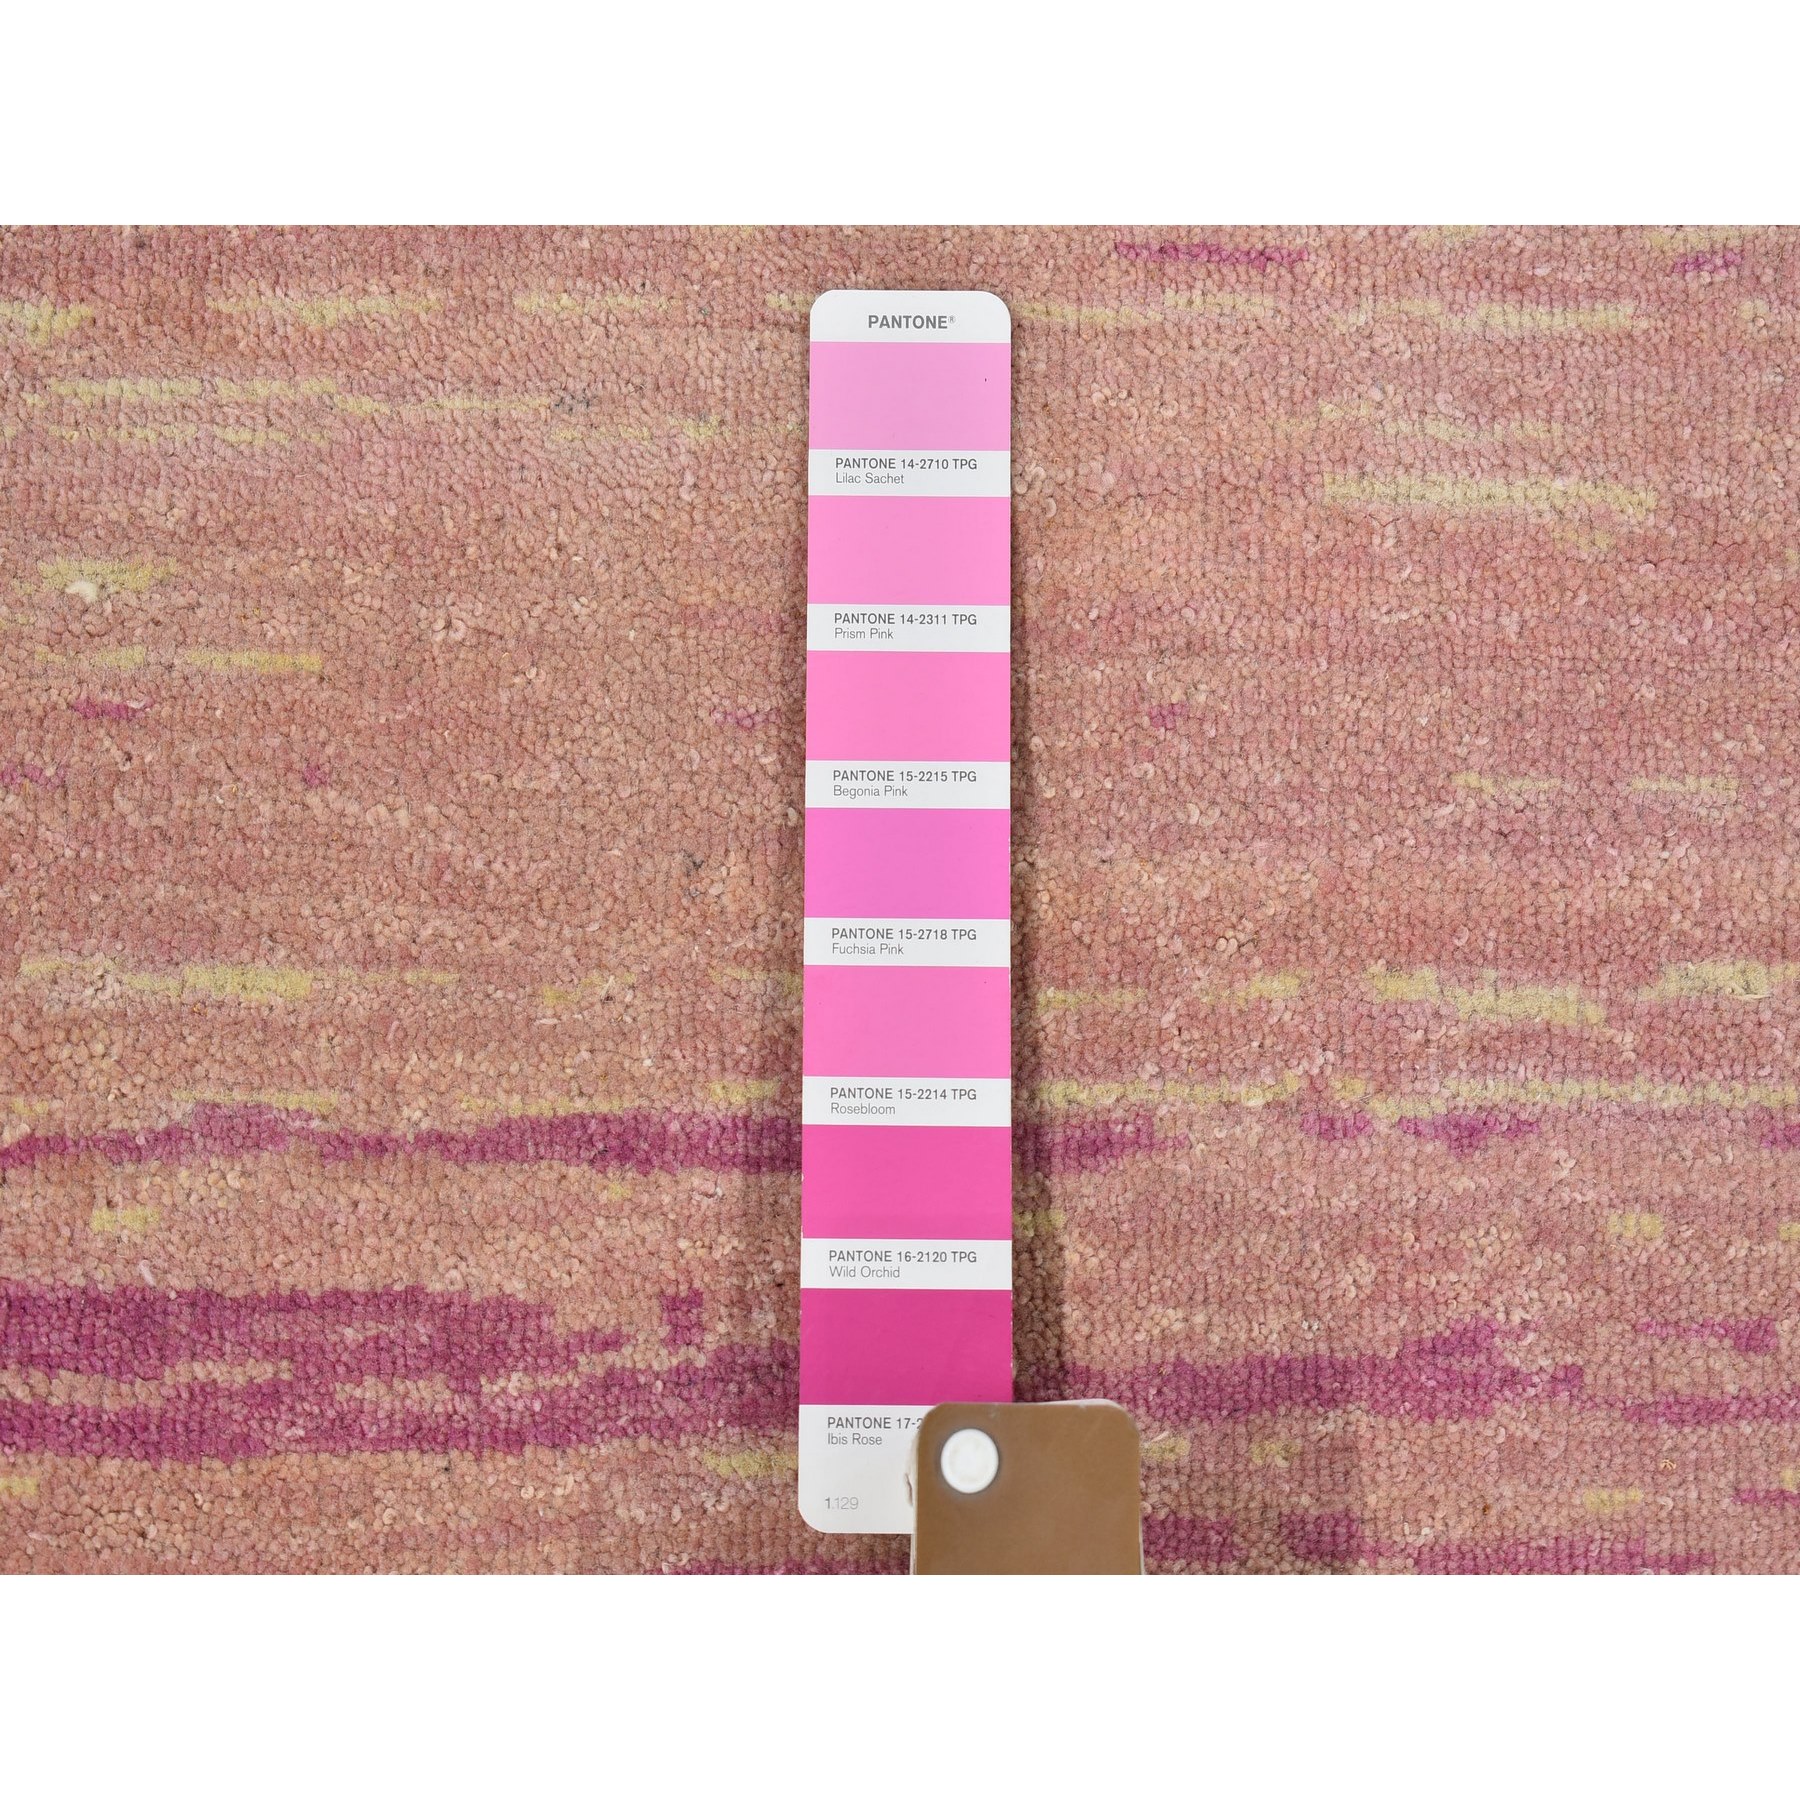 12'1"x15'2" Oversized Pink Zero Pile Organic Wool Ombre Design Hand Woven Oriental Rug 